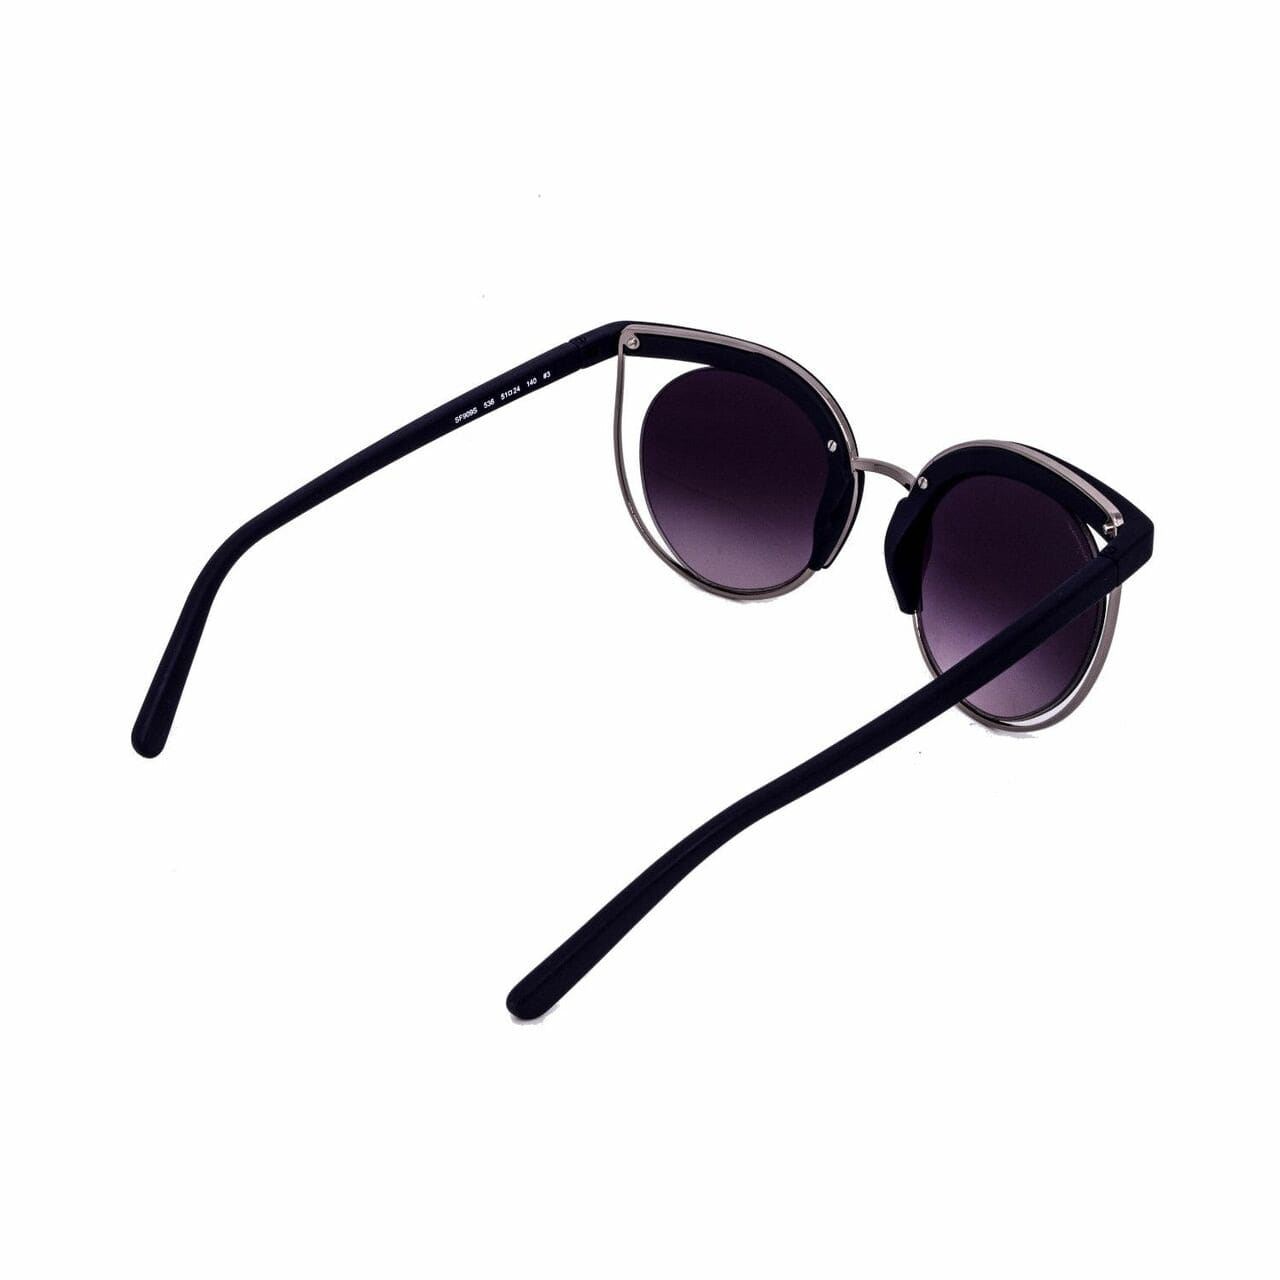 Salvatore Ferragamo SF909S-536 Matte Aubergine Cat-Eye Purple Gradient Lens Women's Sunglasses 886895363389